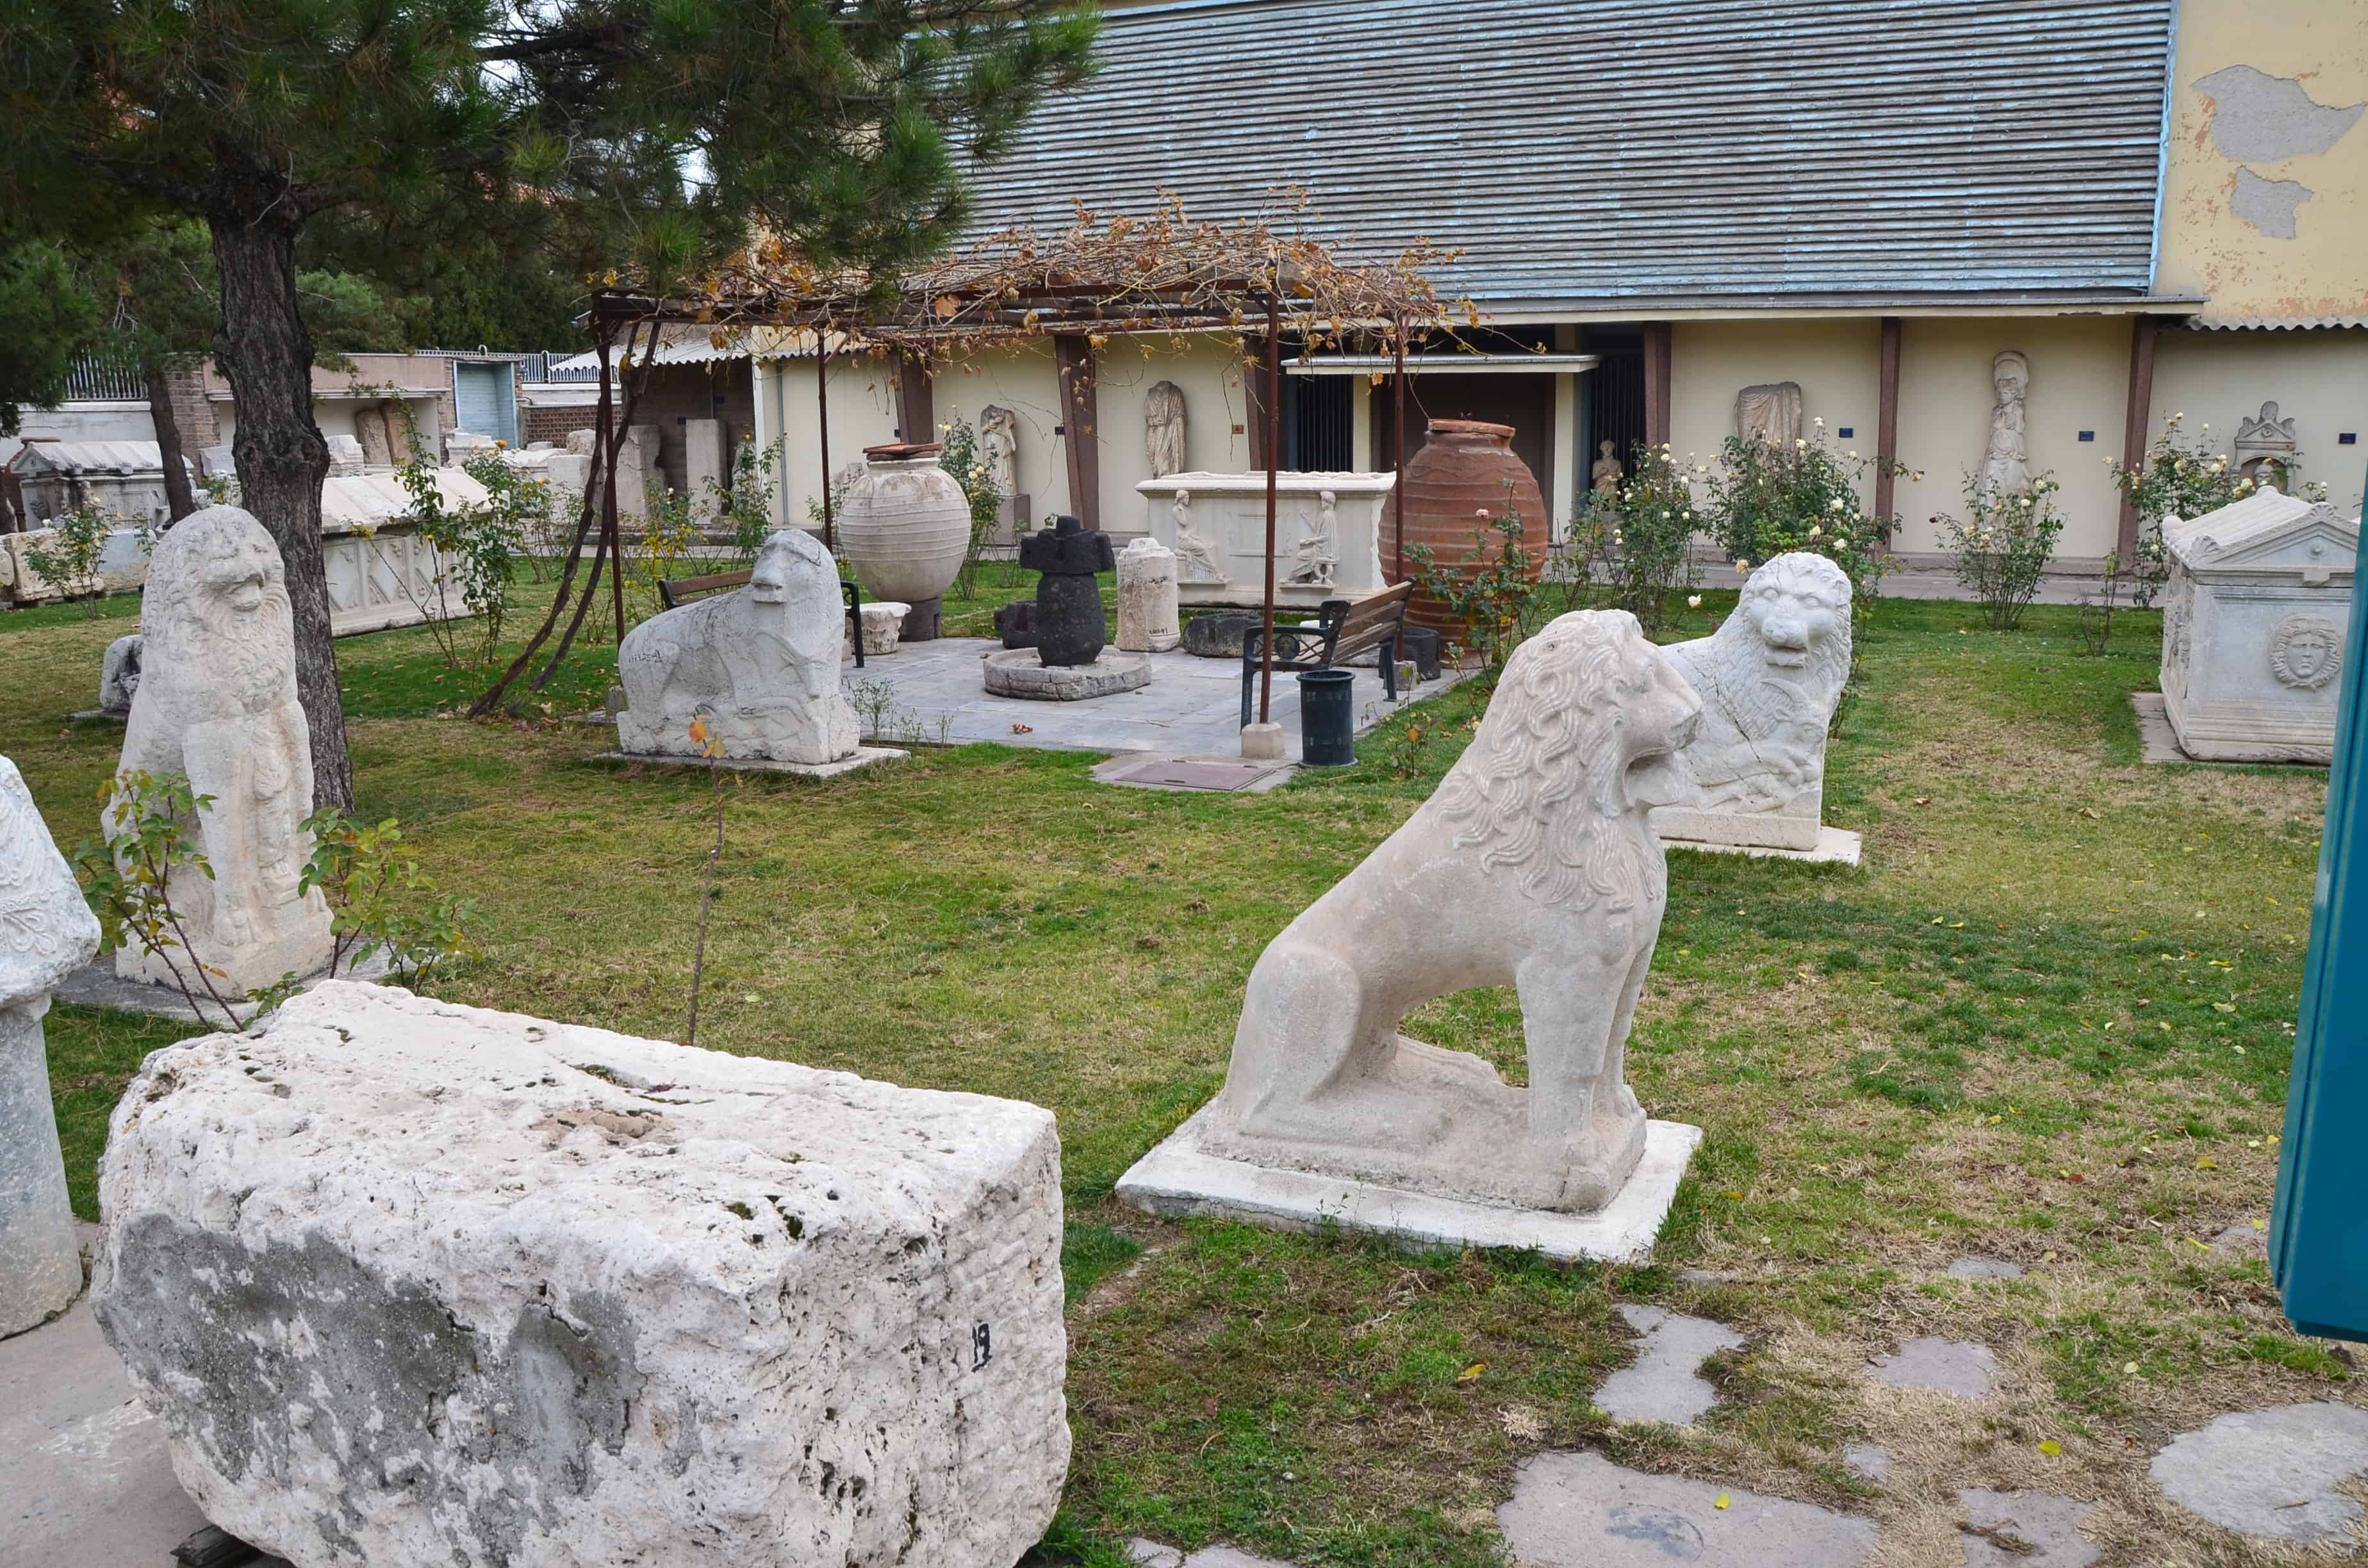 Konya Arkeoloji Müzesi in Konya, Turkey